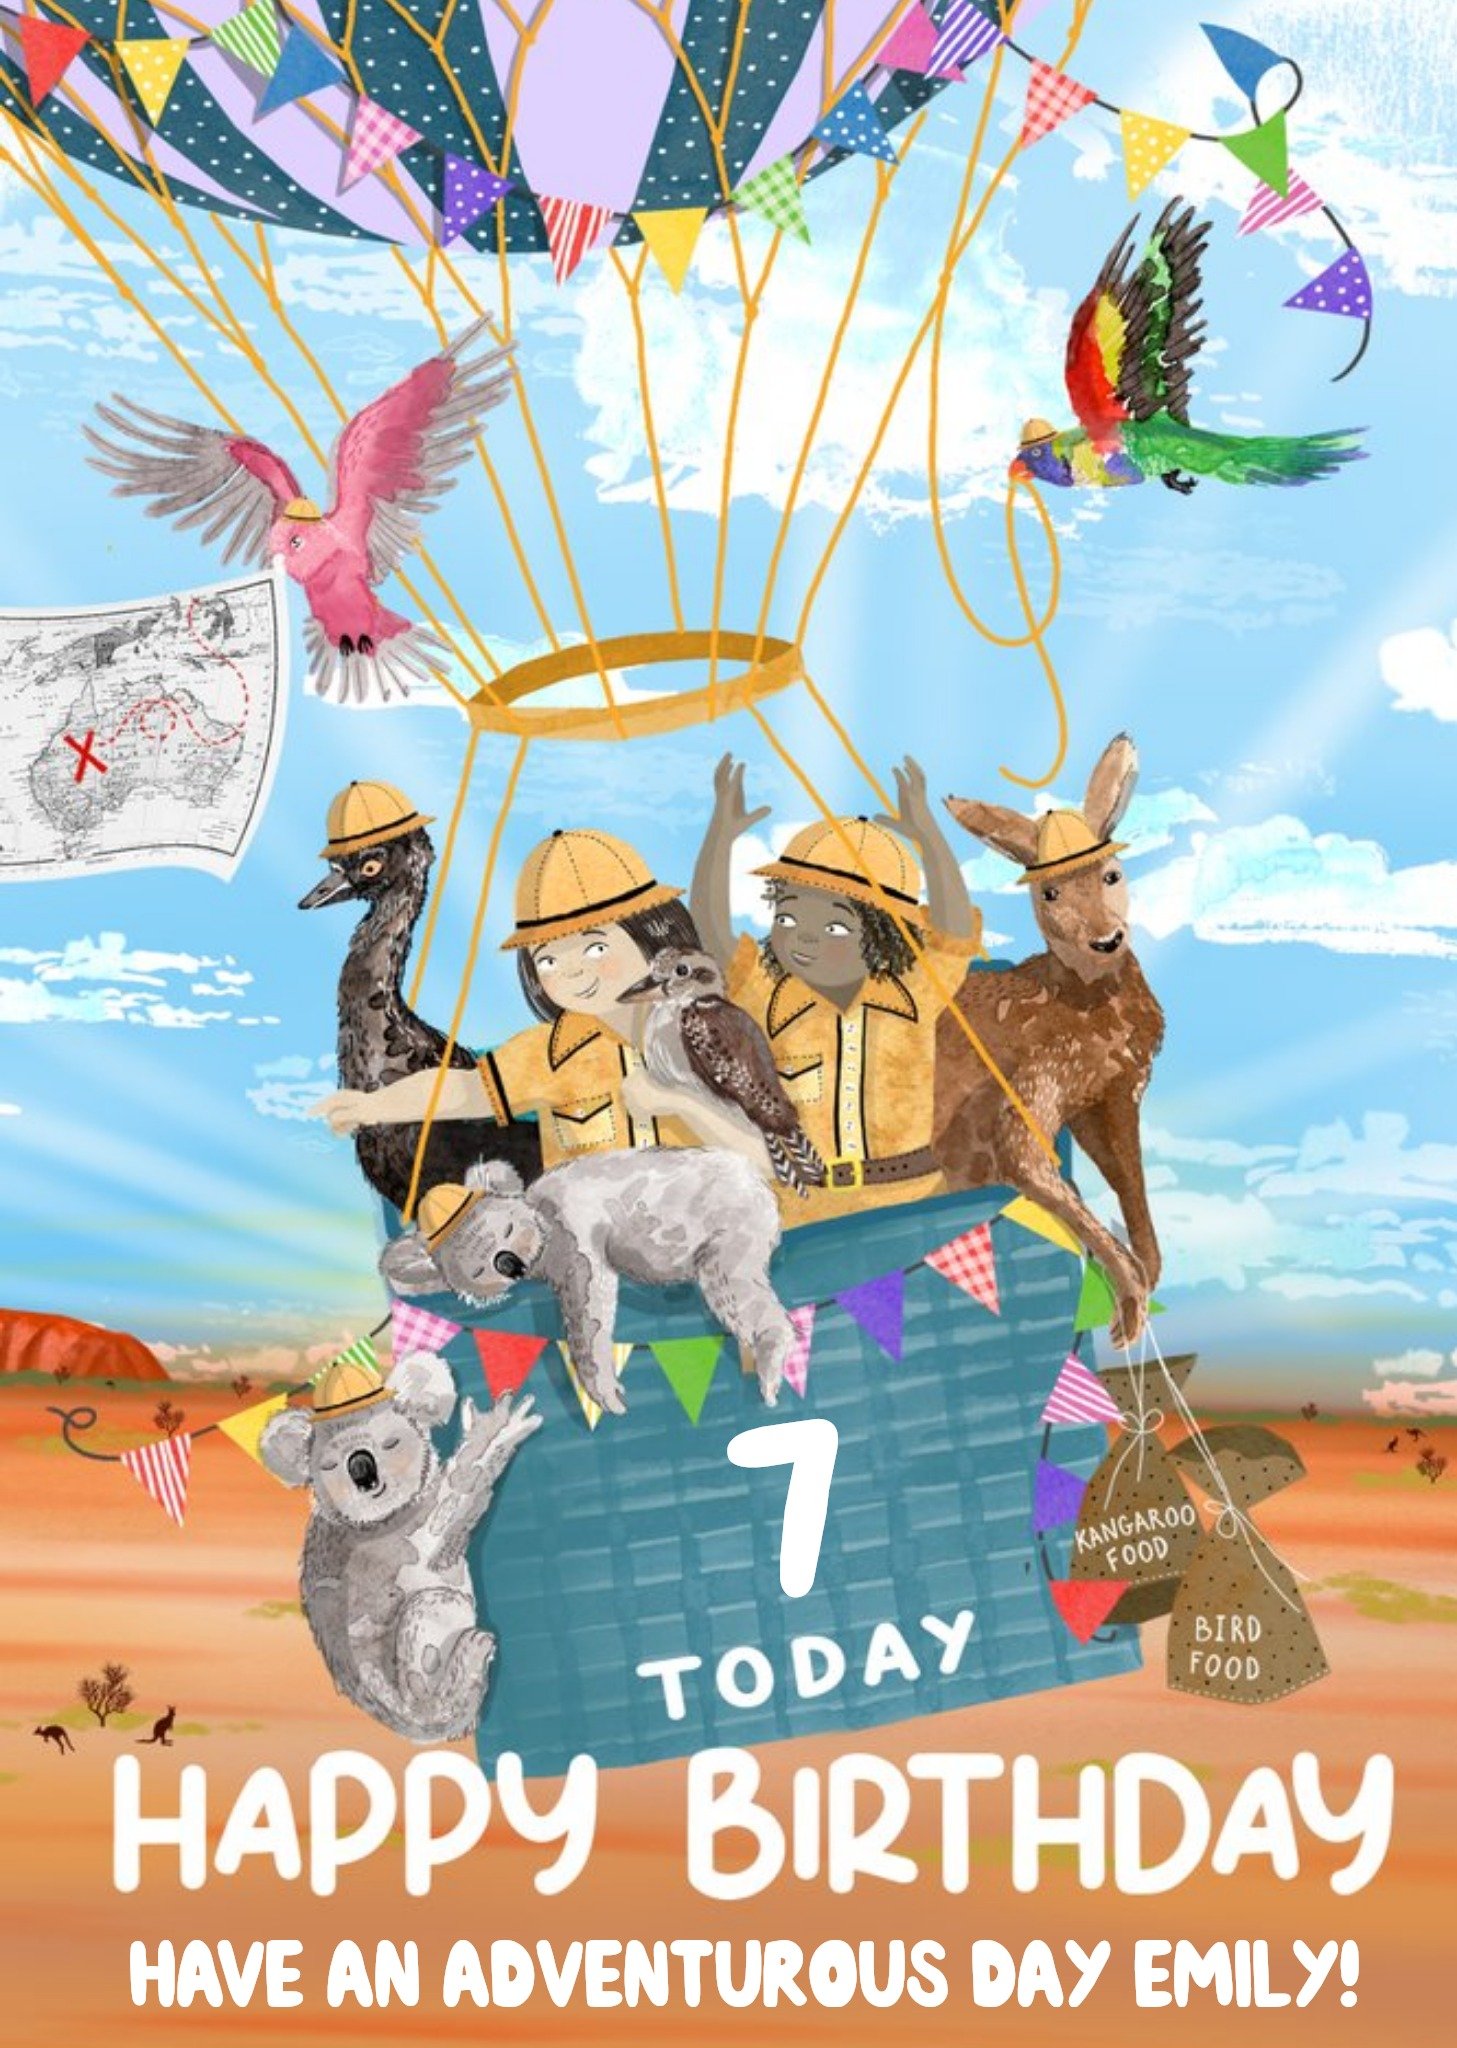 Okey Dokey Design Okey Dokey Hot Air Balloon 7 Today Have An Adventurous Birthday Card, Large